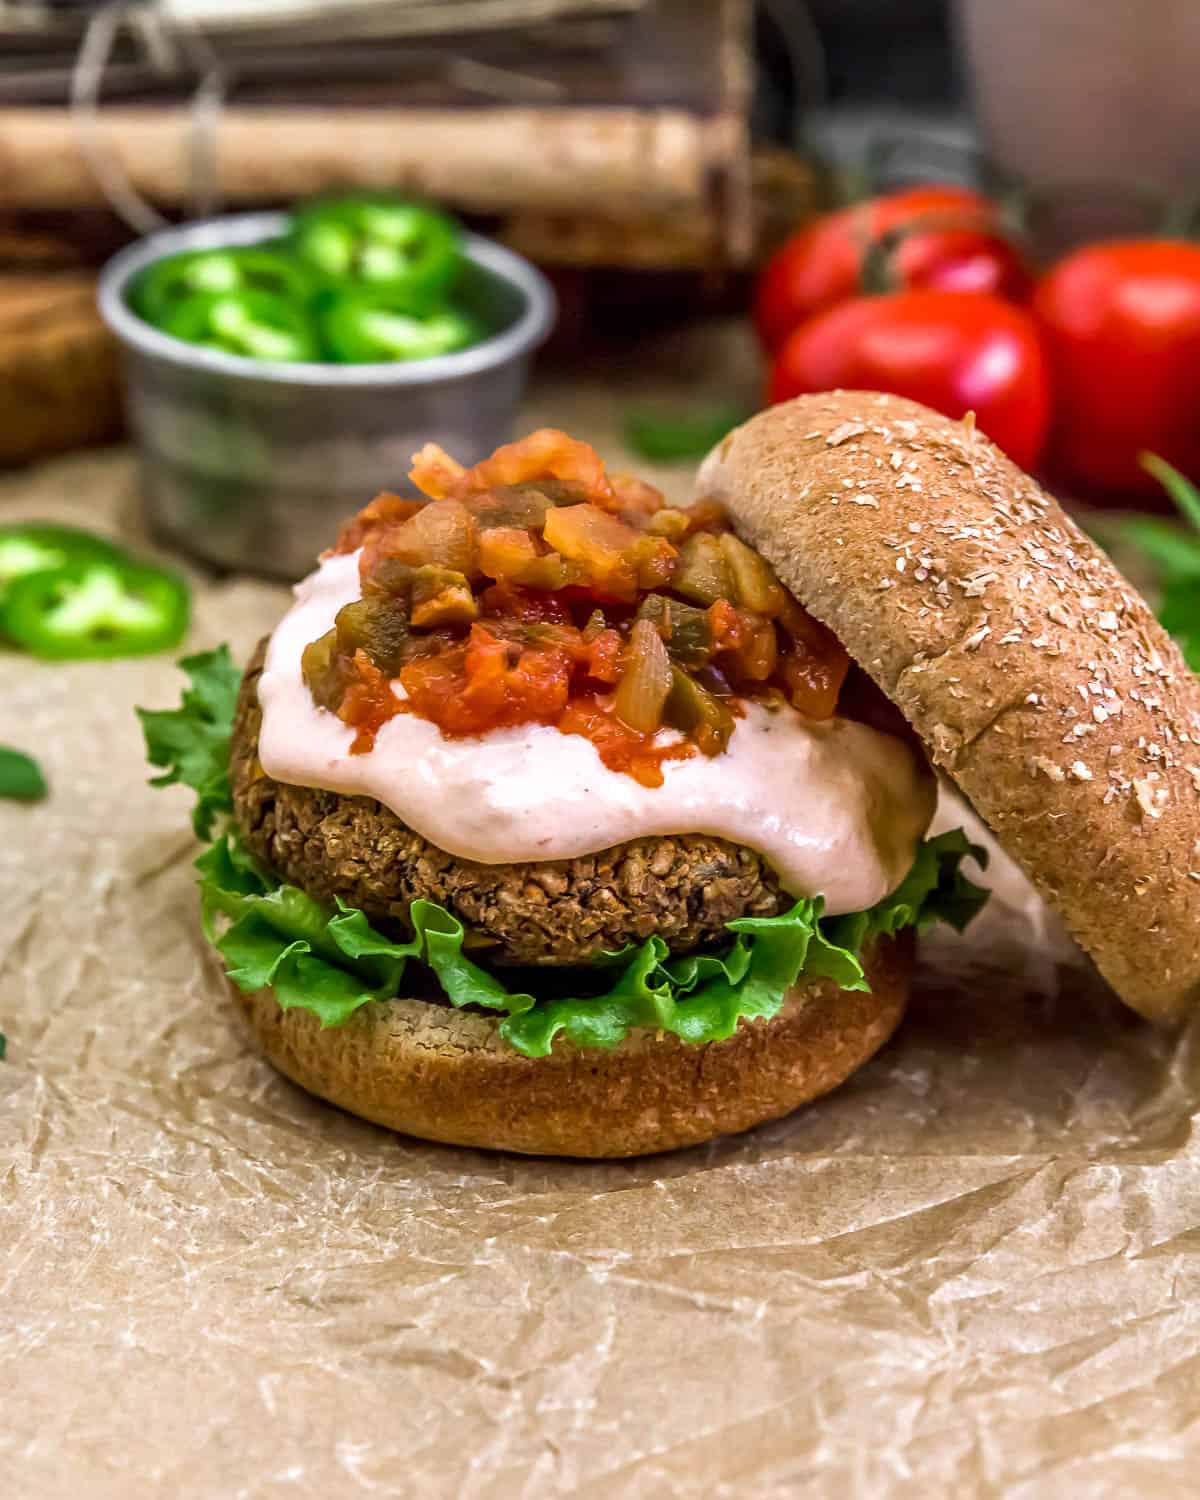 Mexican Bean Burger with vegan sour cream and salsa